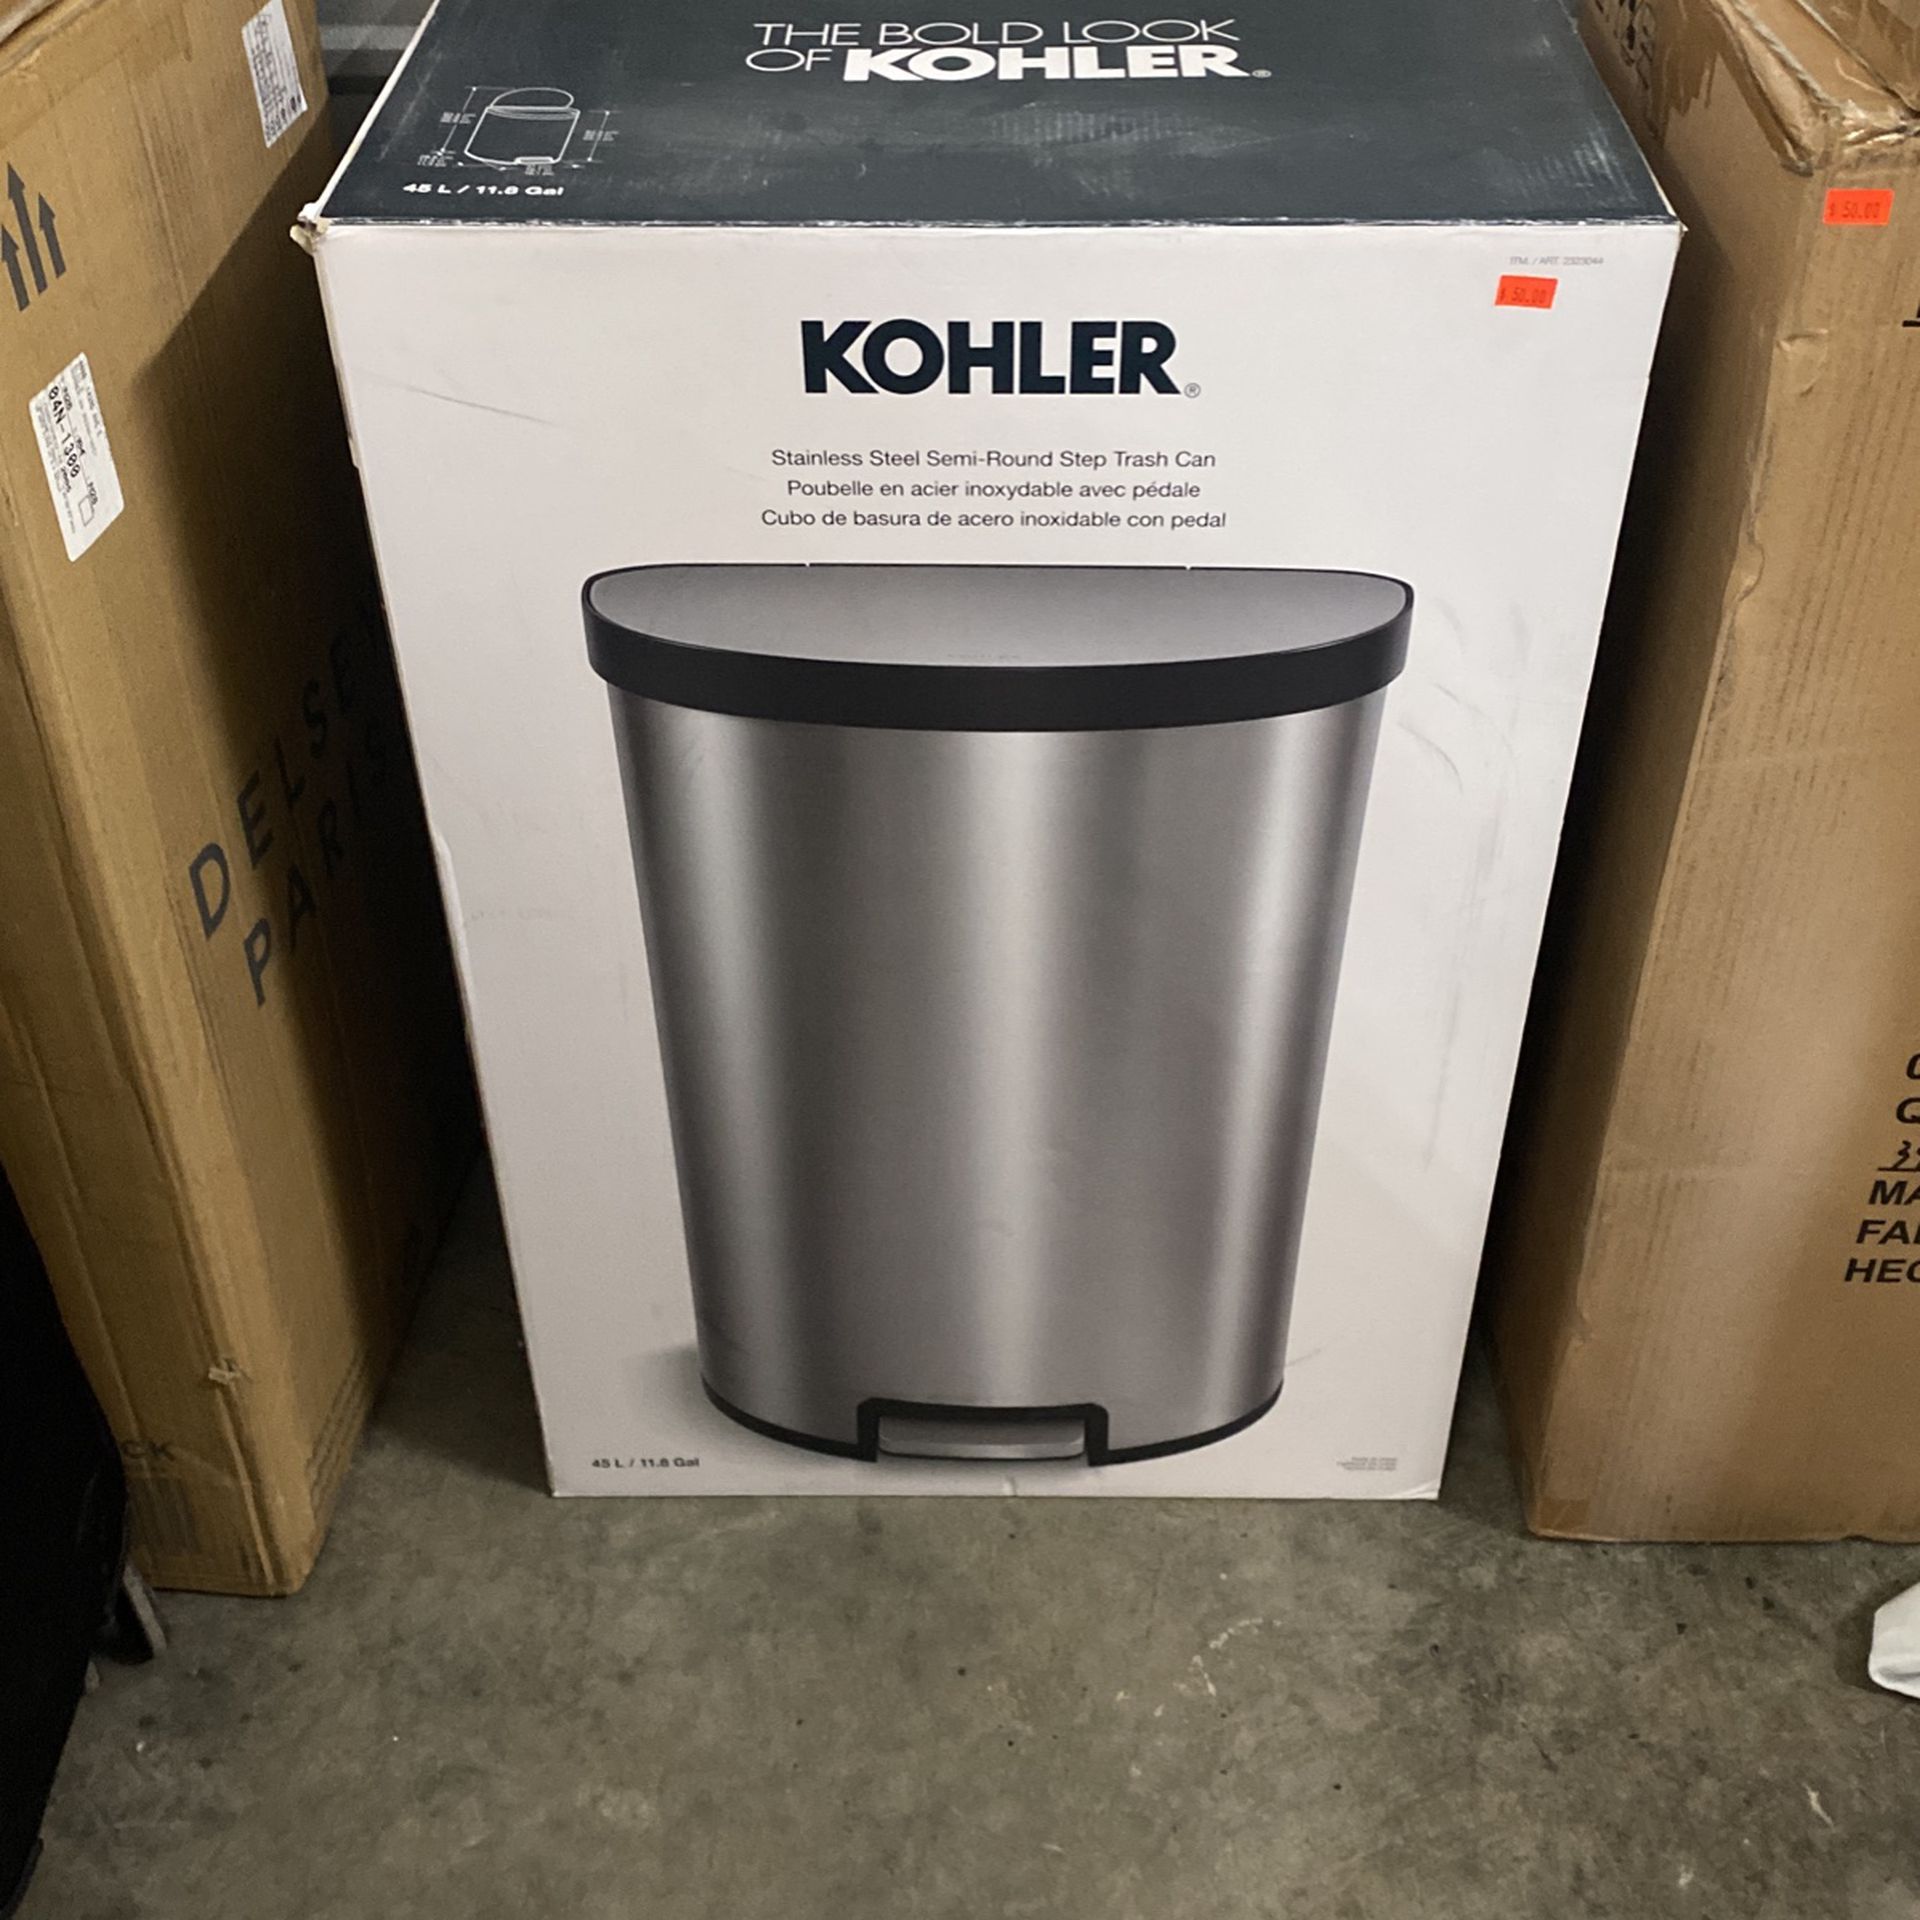 Kohler Stainless Steel Semi-round Step Trash Can